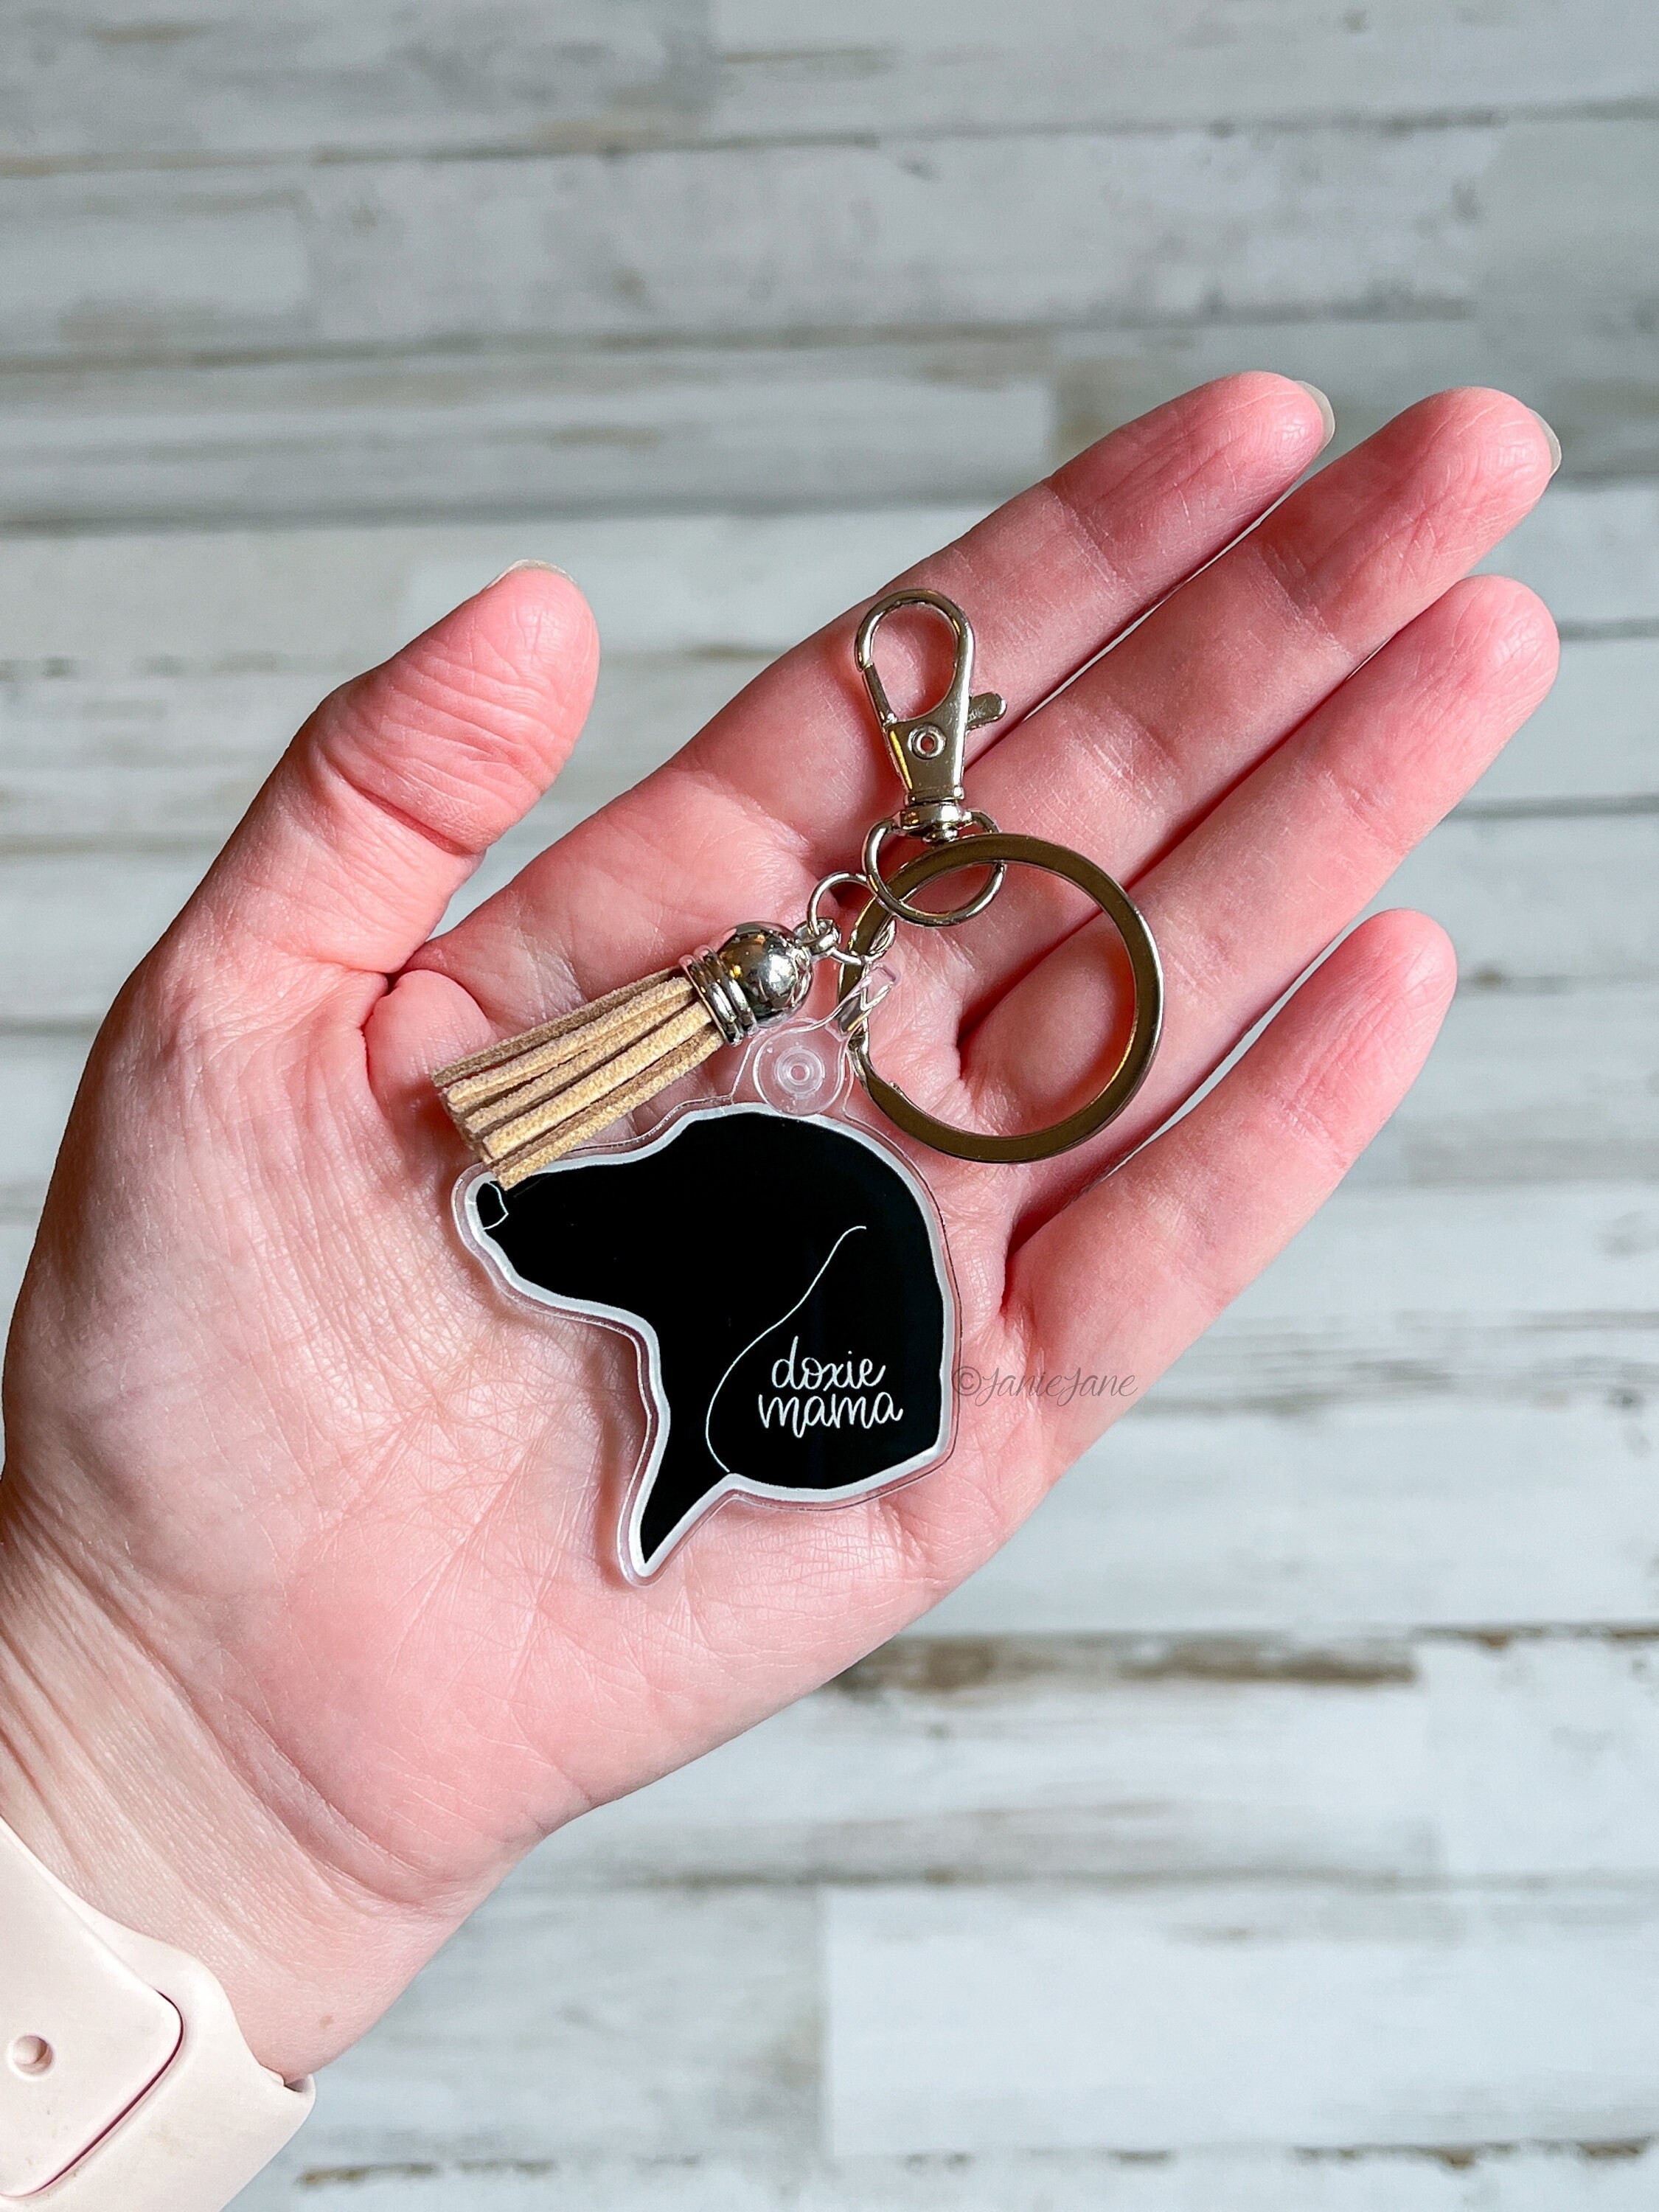 Keychain Keys Dog, Keychain Keys Car Dog